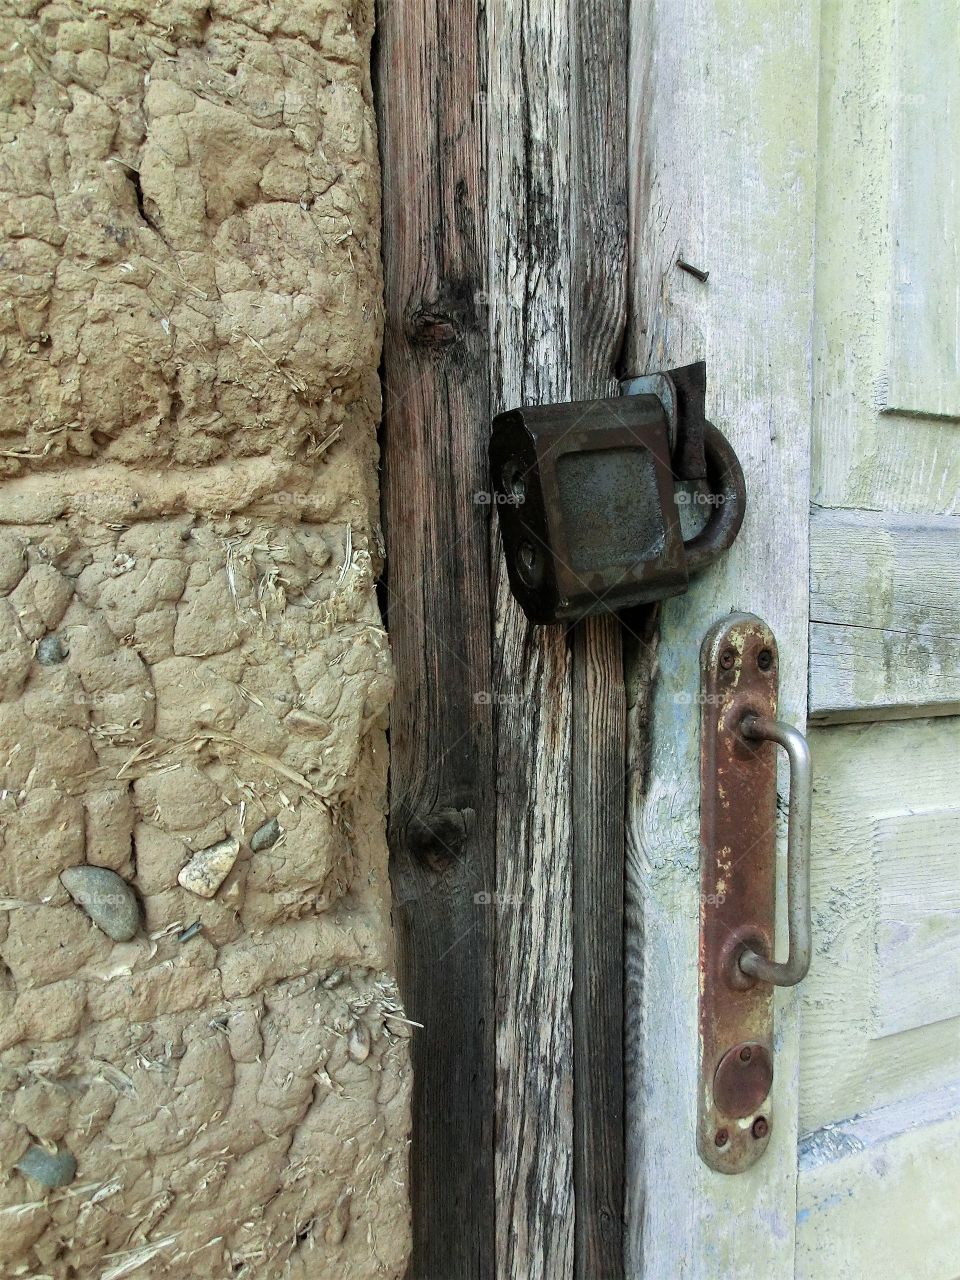 Locked padlock for two keys